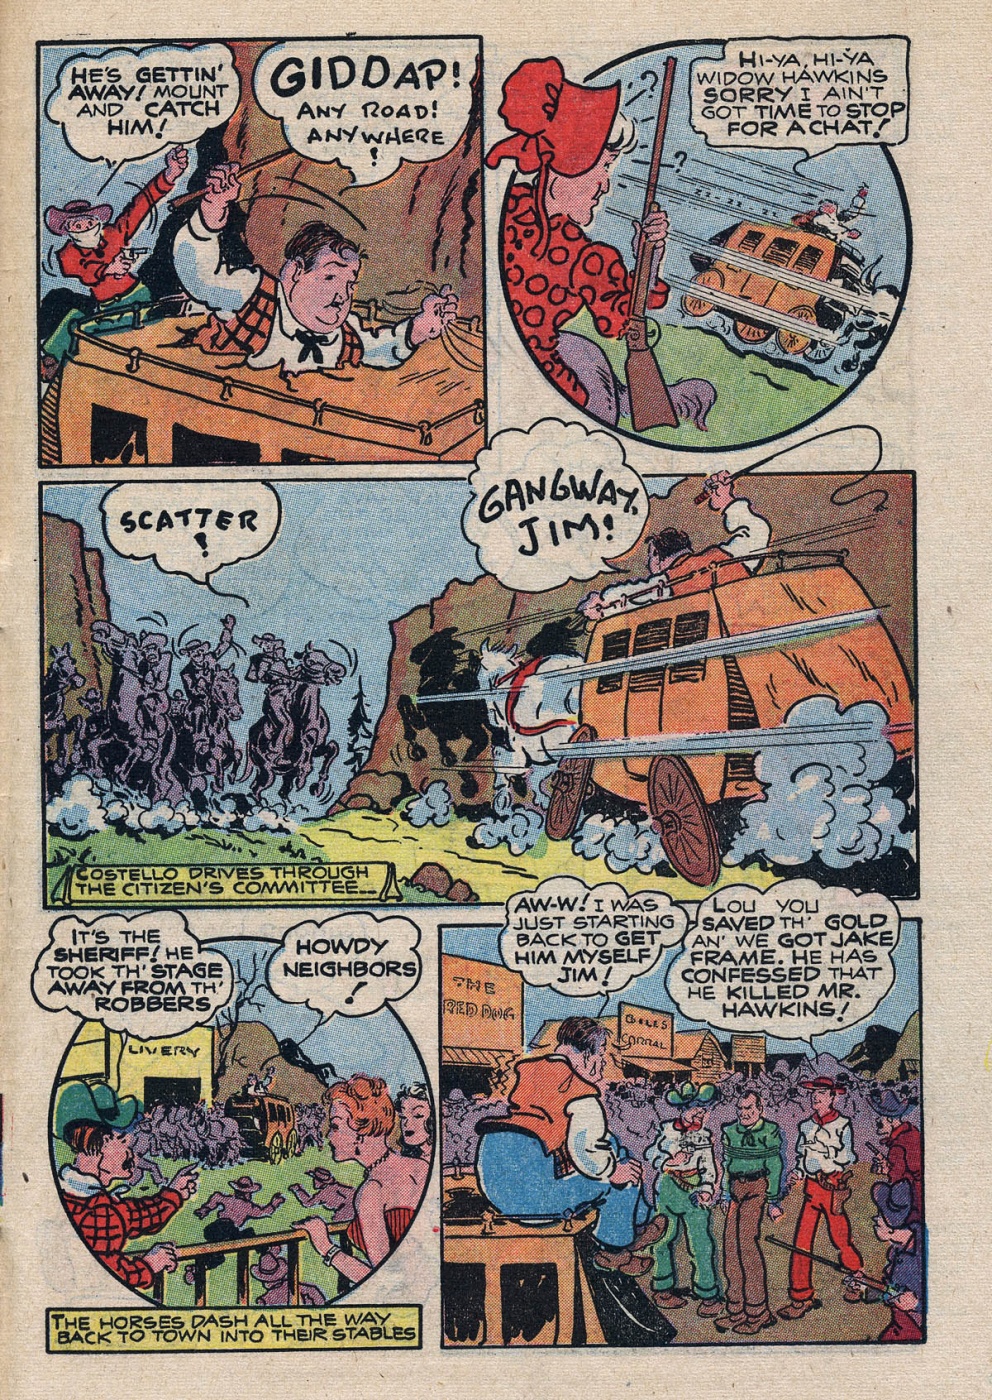 Funny Comic Strips - Abbott and Costello 001 (Feb 1948) 33